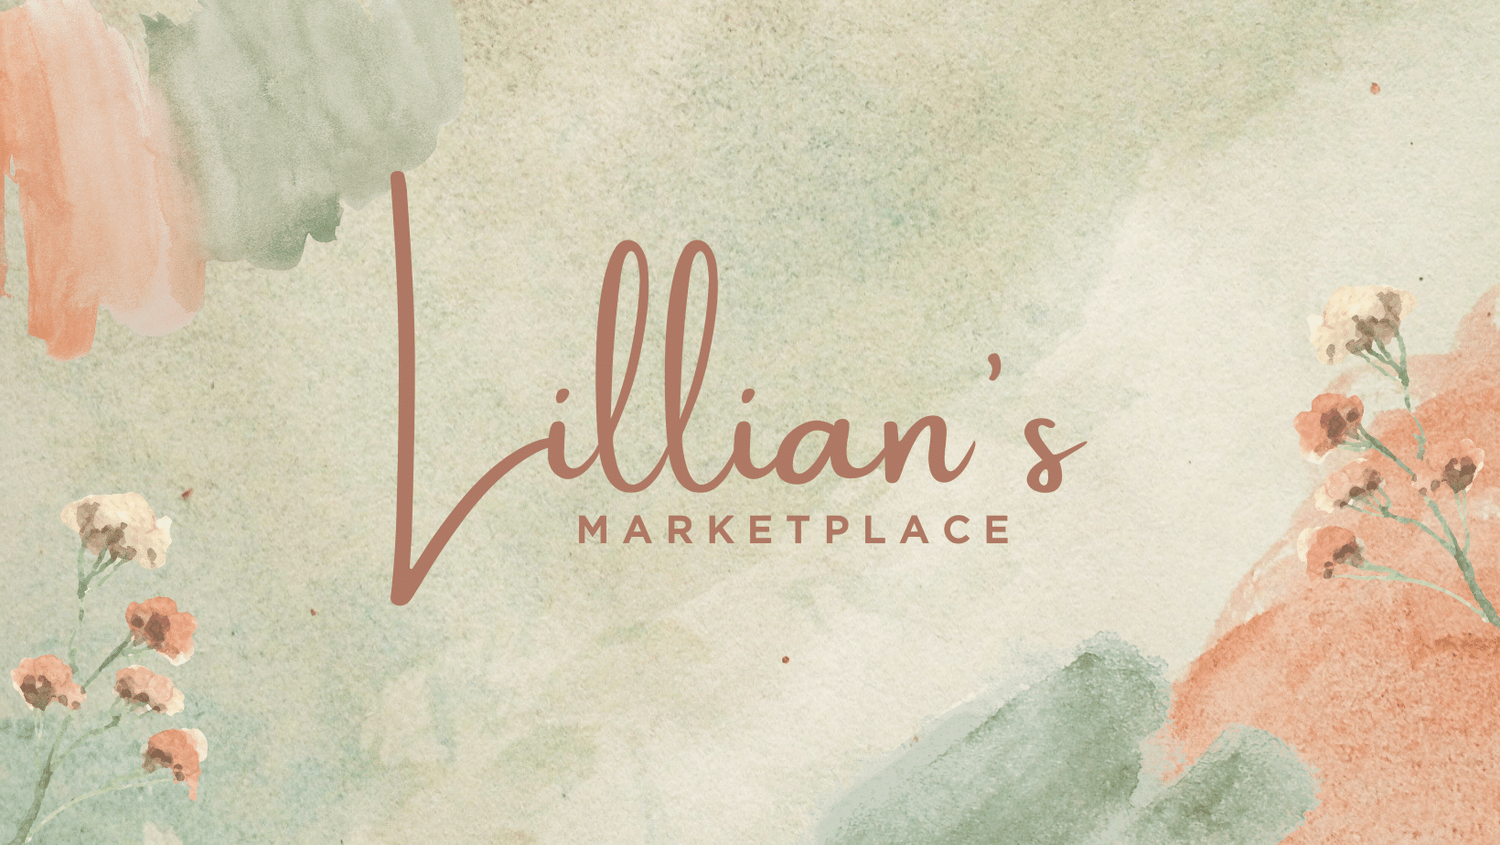 Lillian's Marketplace Cover Image